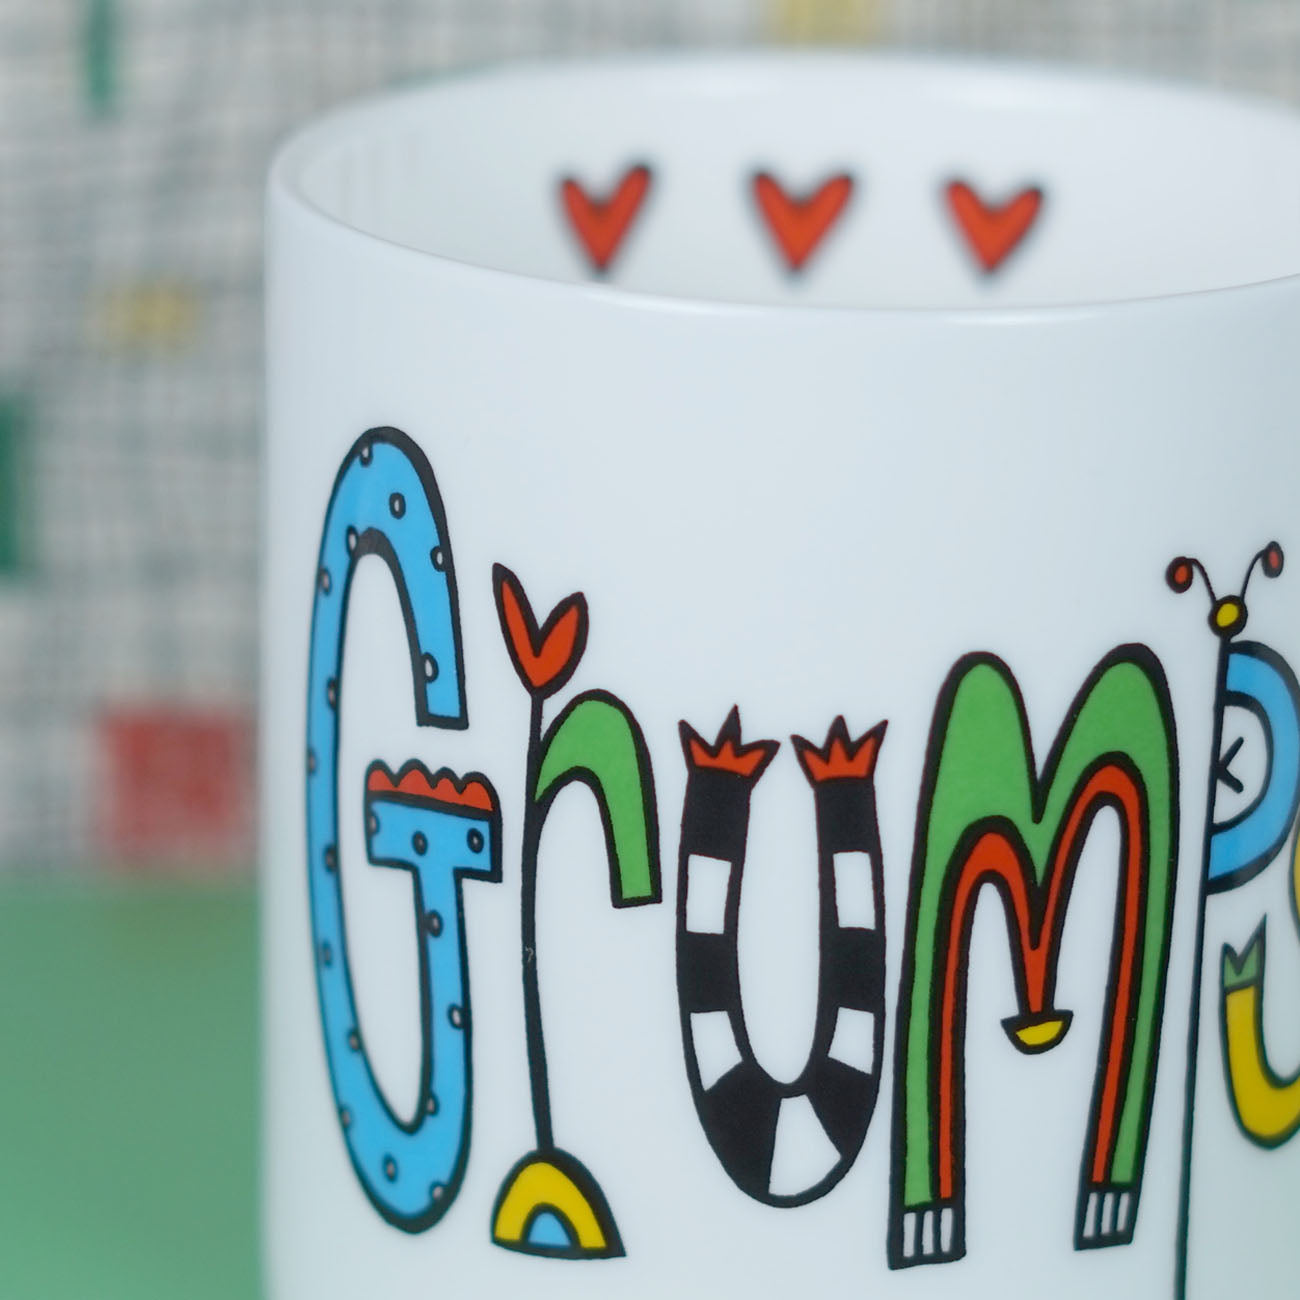 Personalised Grumps Mug